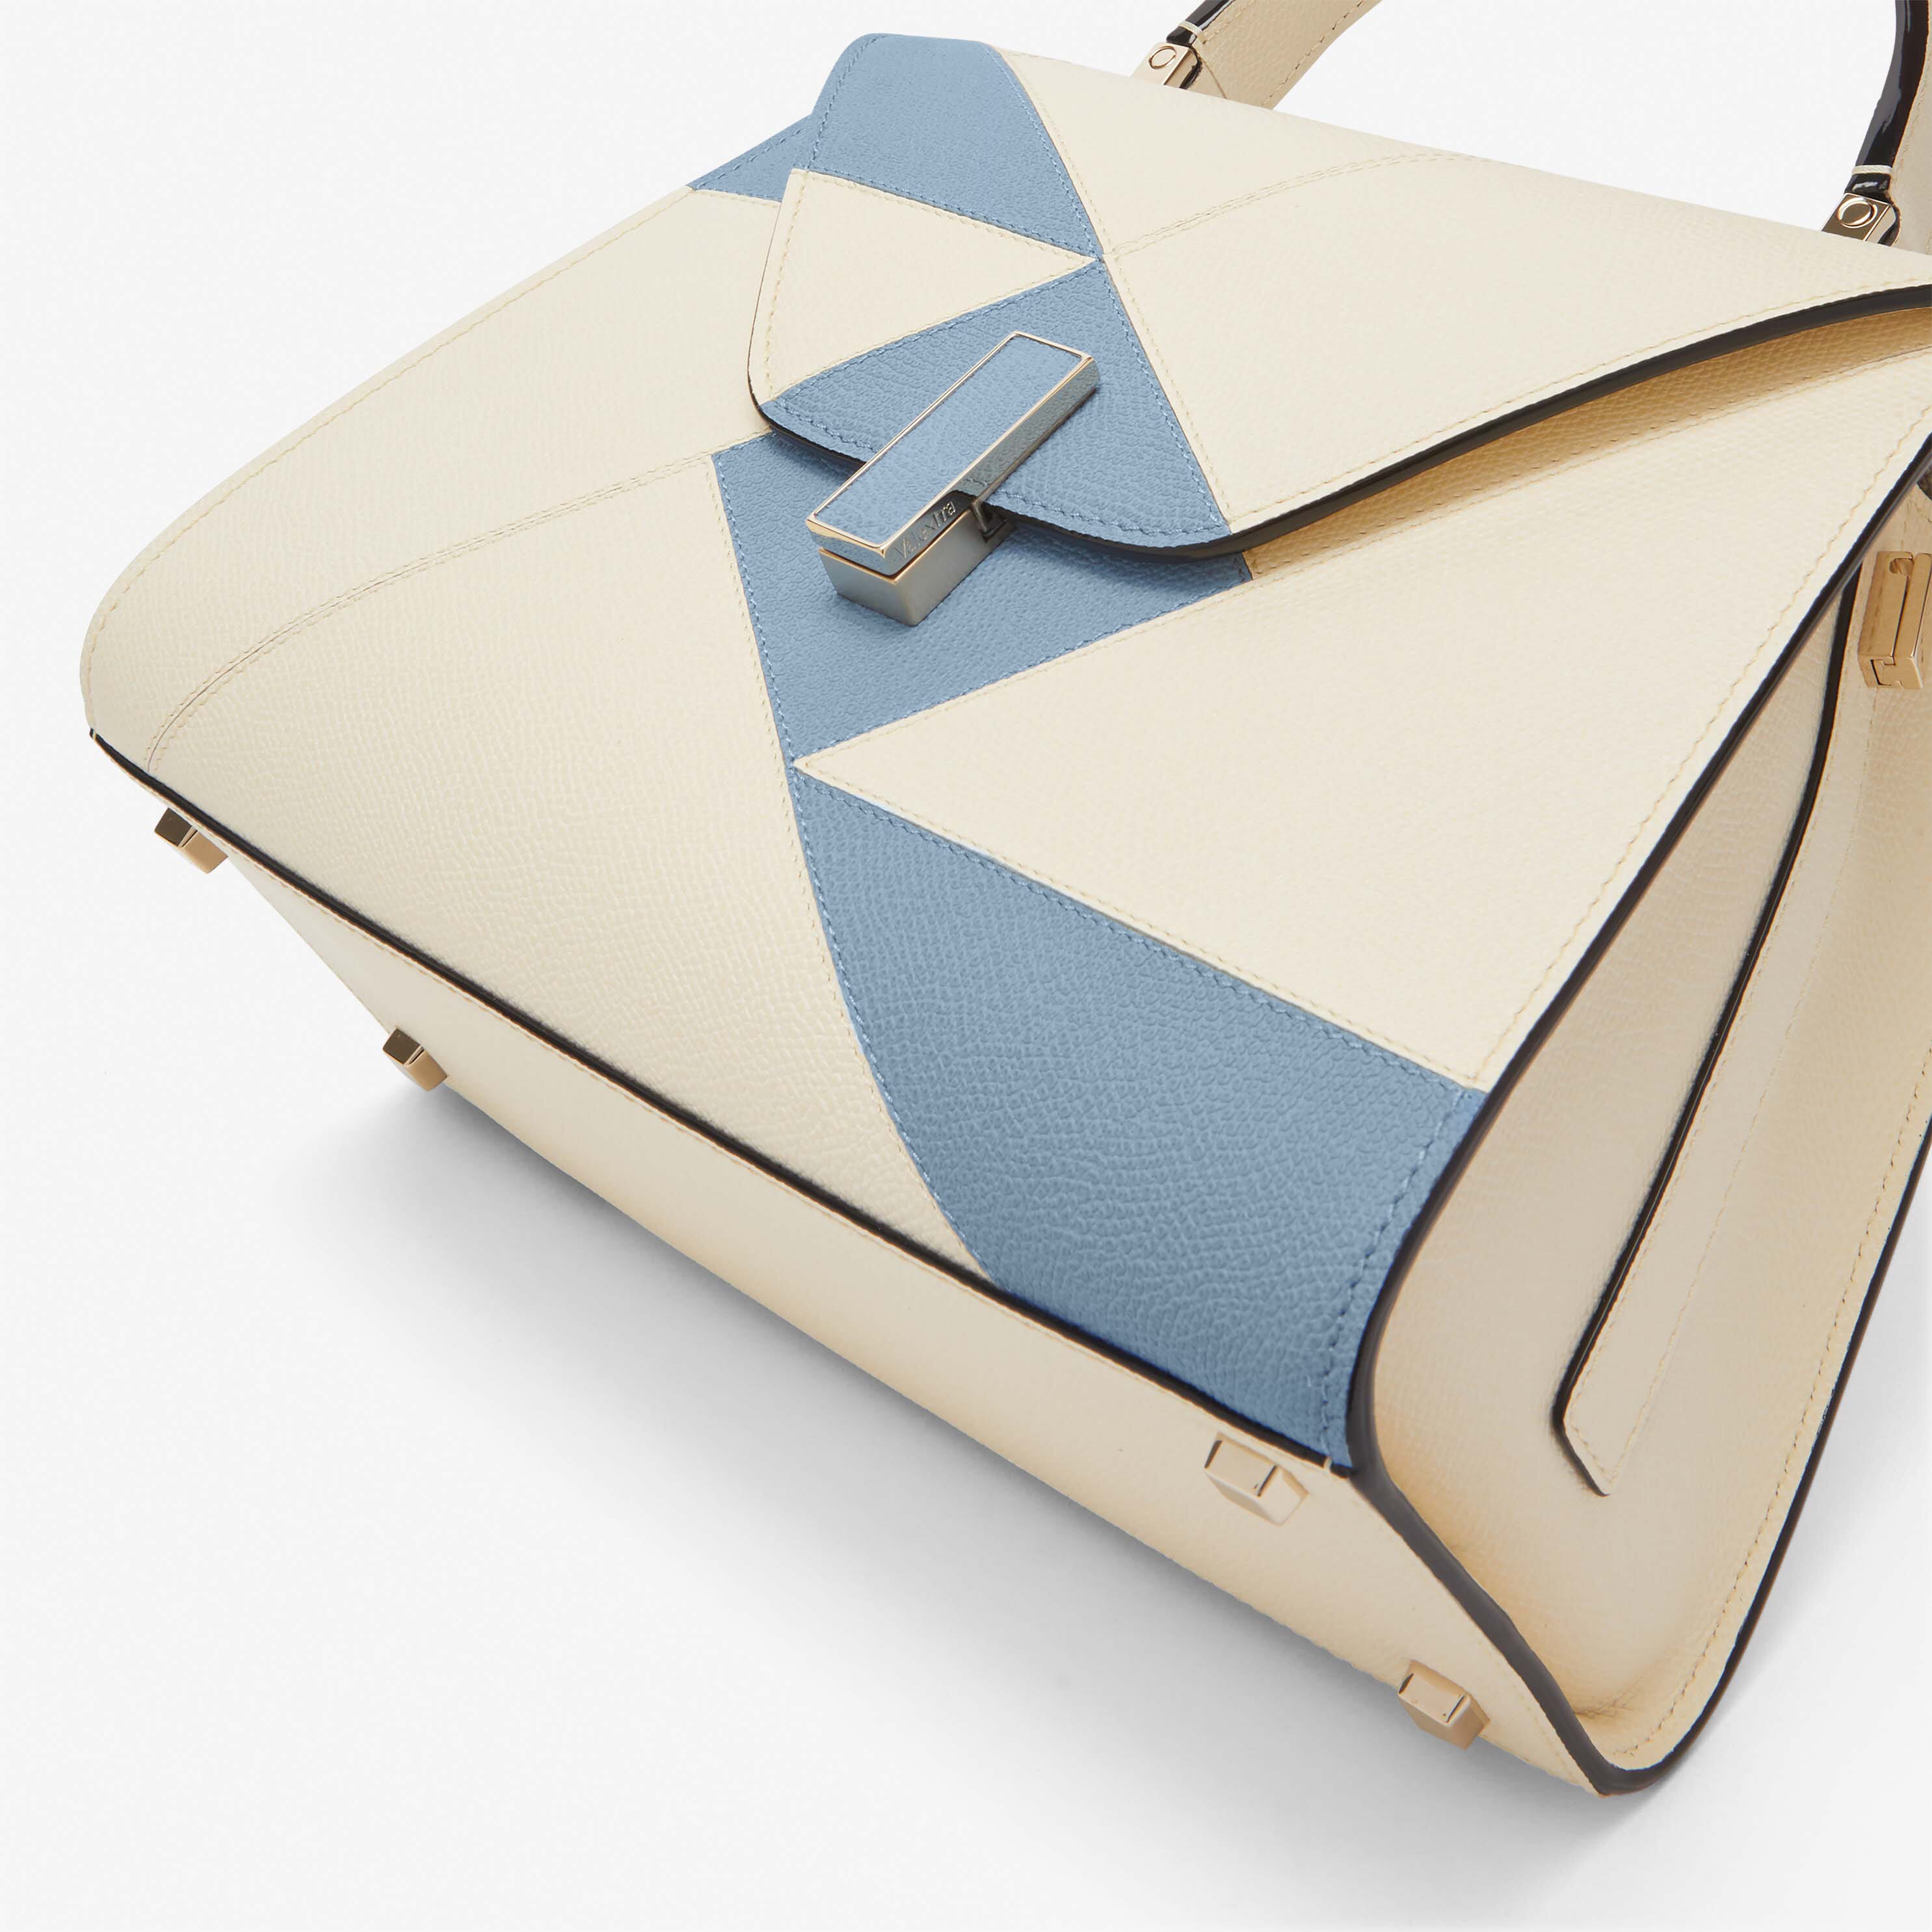 Iside Carousel Top handle Medium bag - Pergamena White/Shirt Blue - Vitello VS-Intarsio Rombo - Valextra - 3